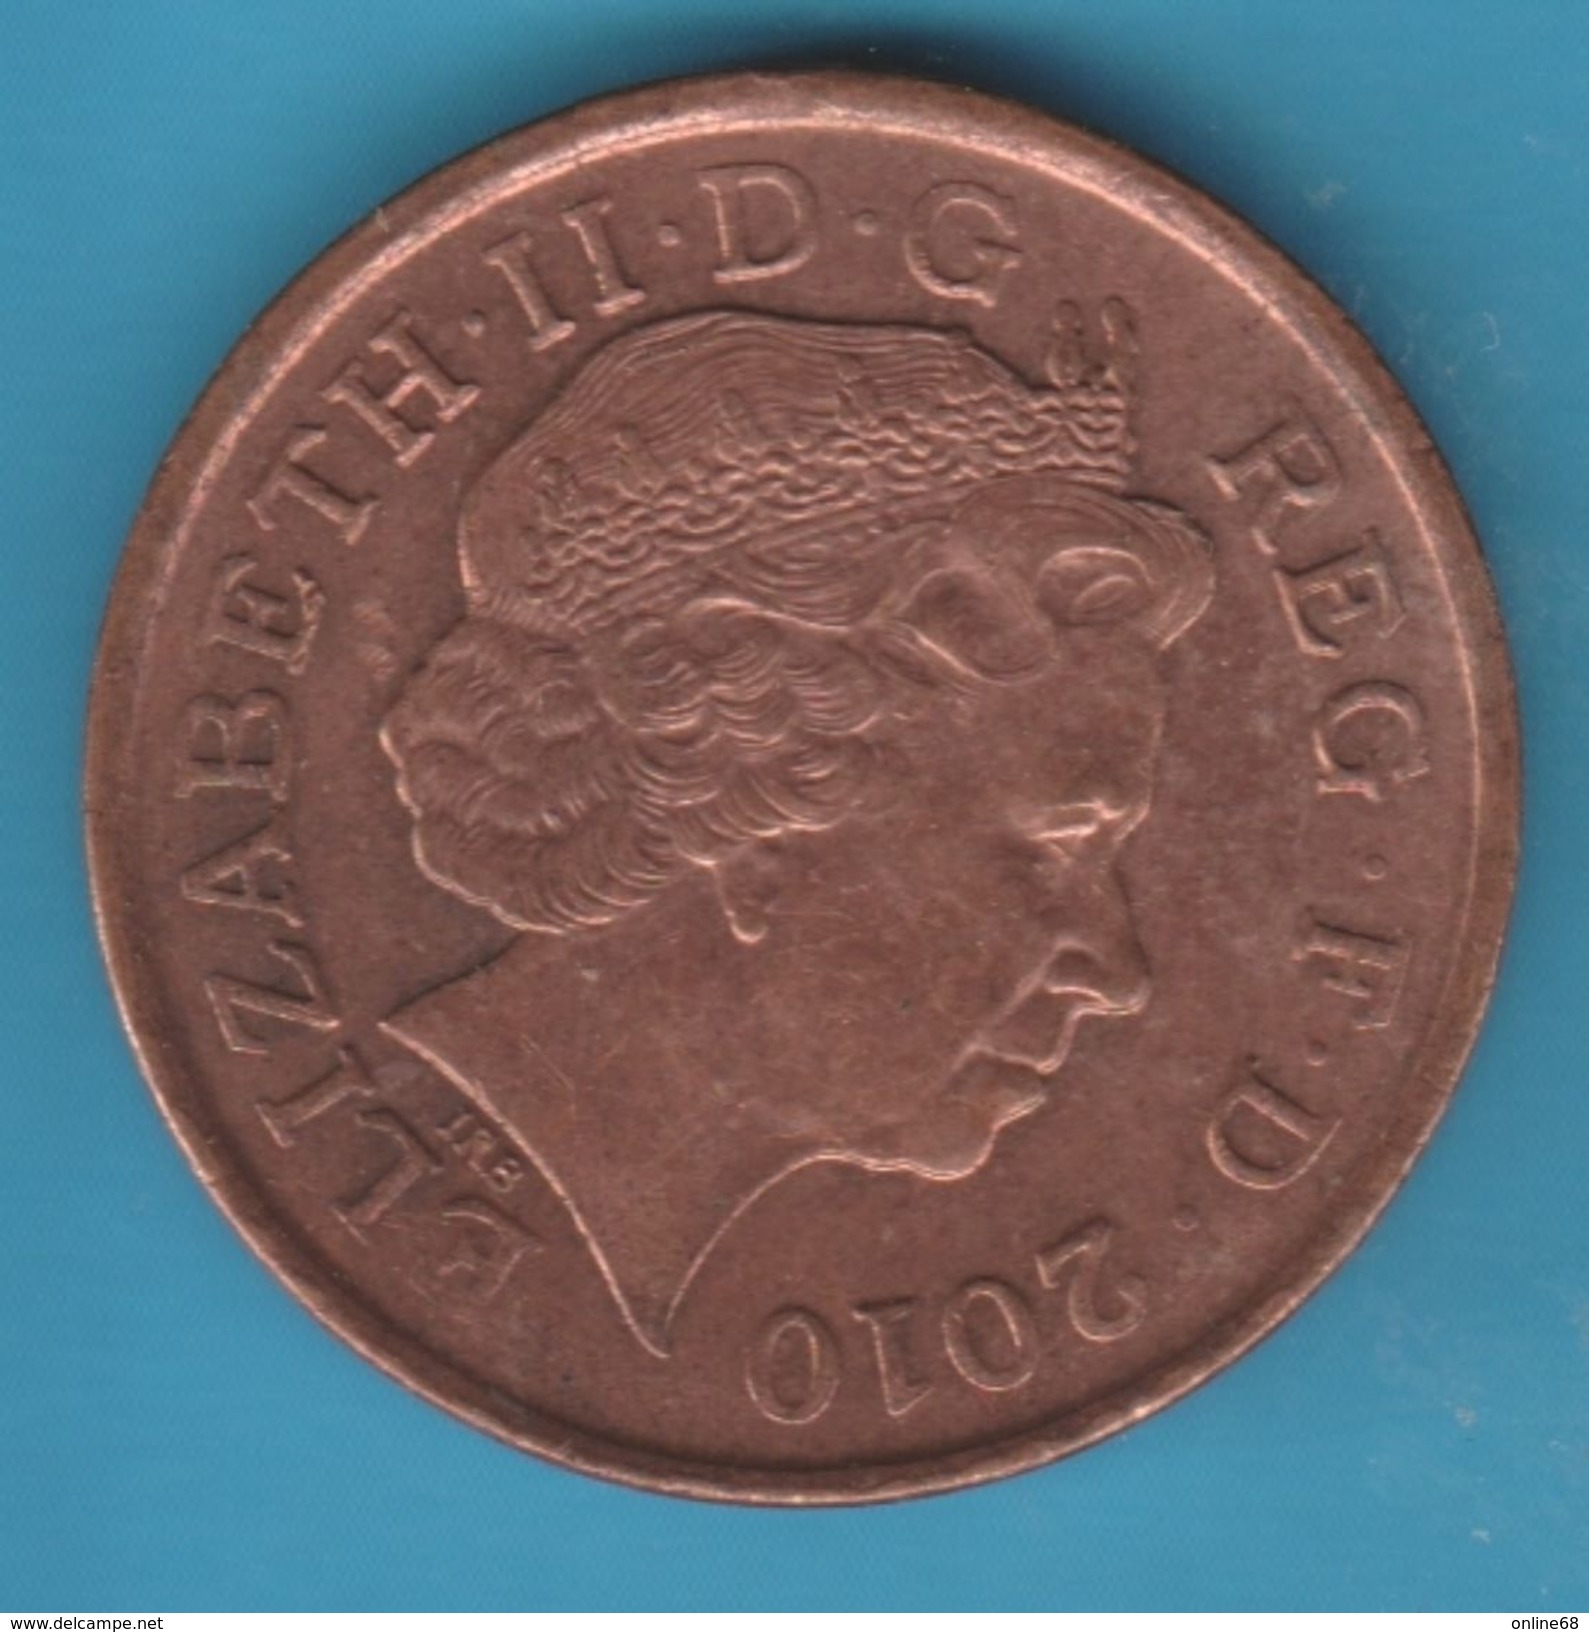 GB 1 PENNY 2010 KM# 1107 Elizabeth II - 1 Penny & 1 New Penny